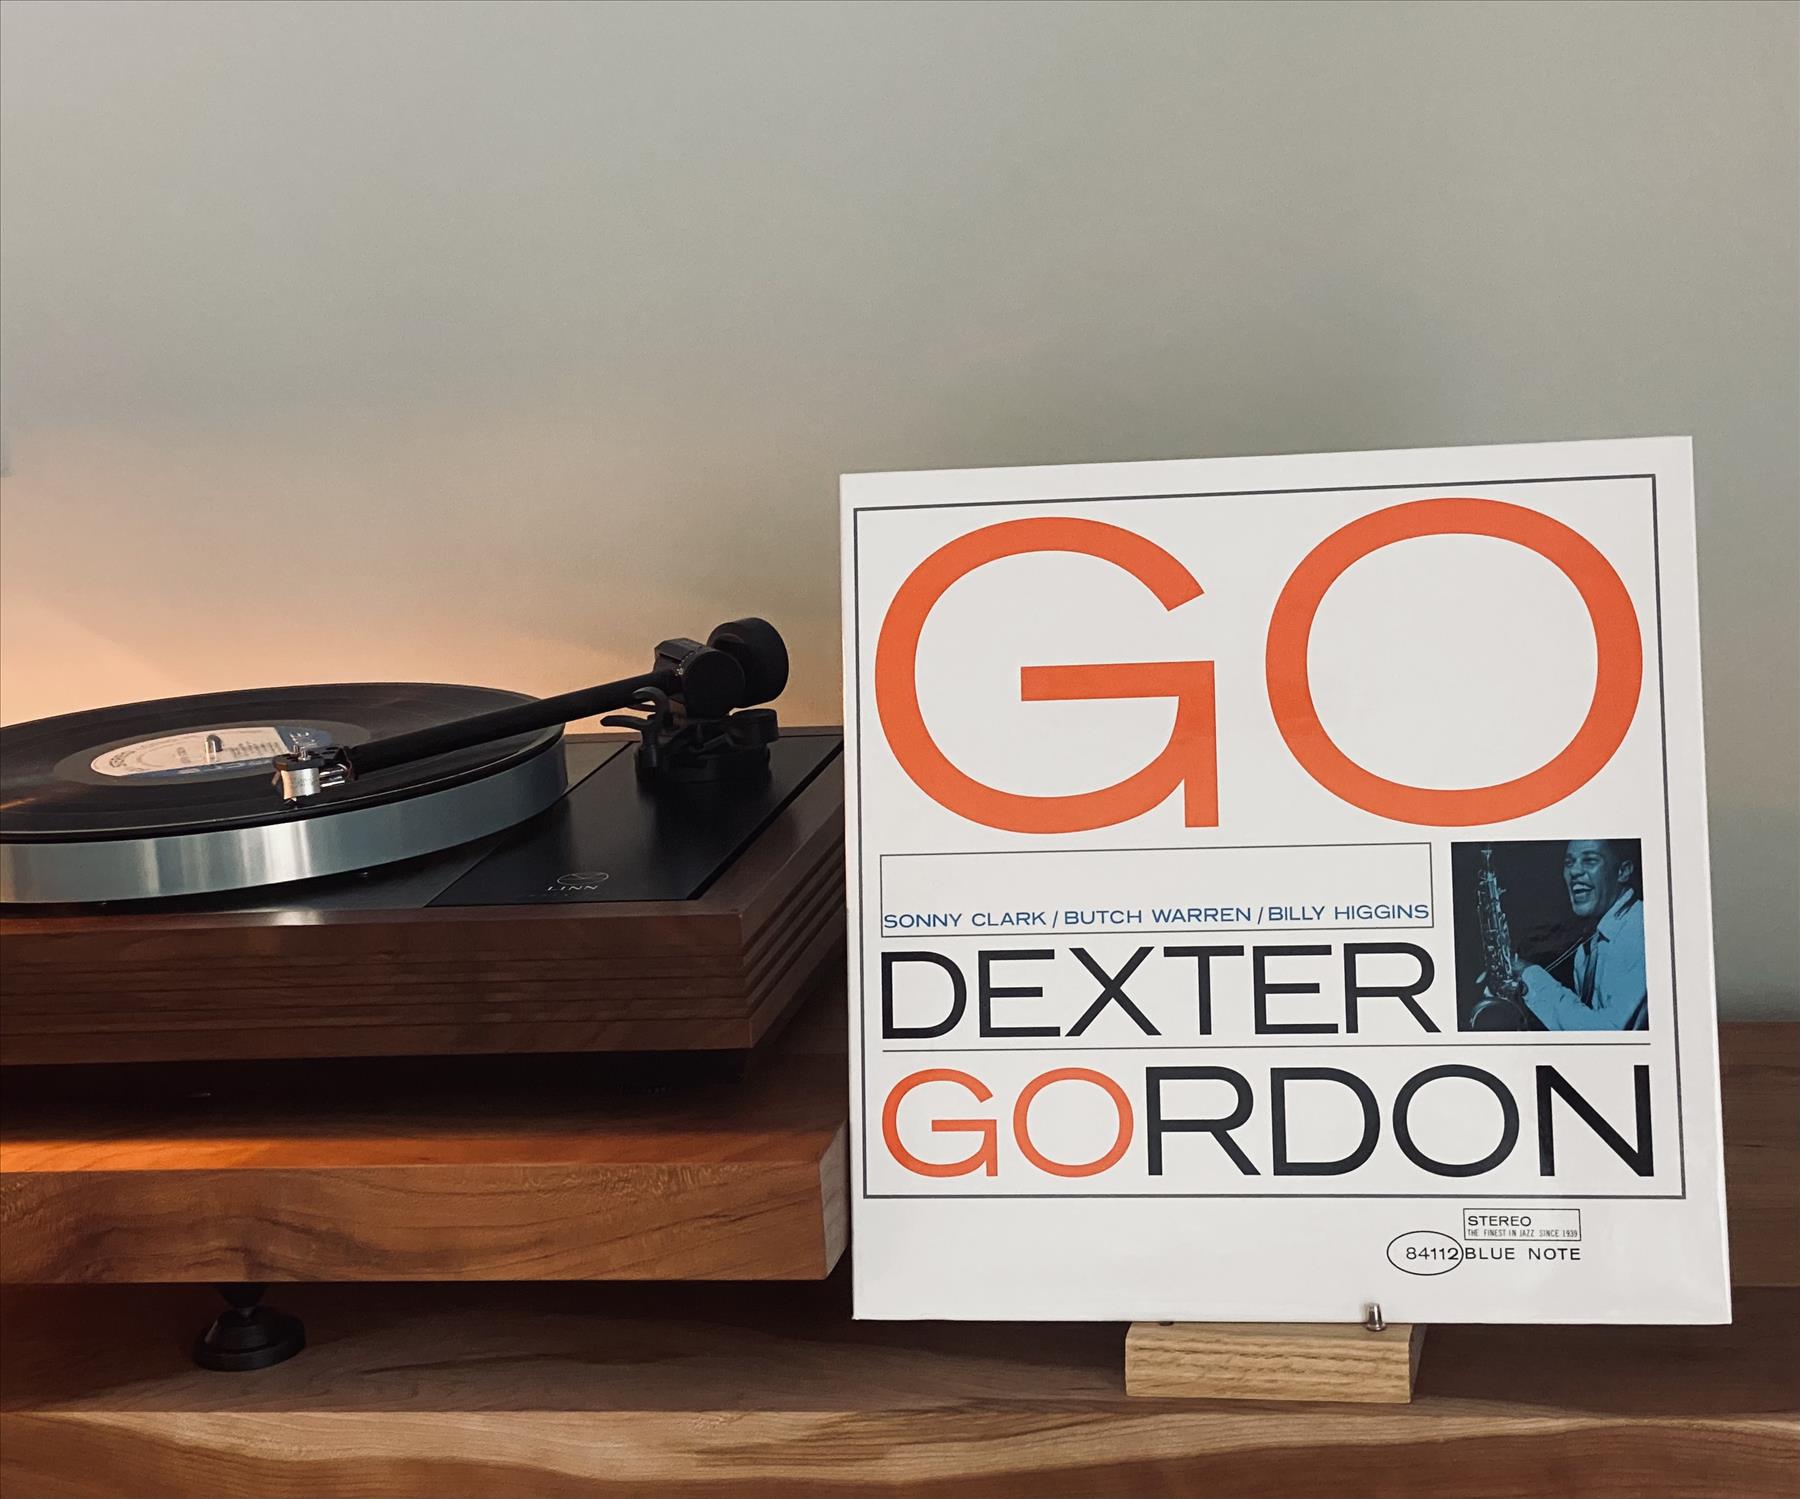 Dexter Gordon's indispensable Jazz record 